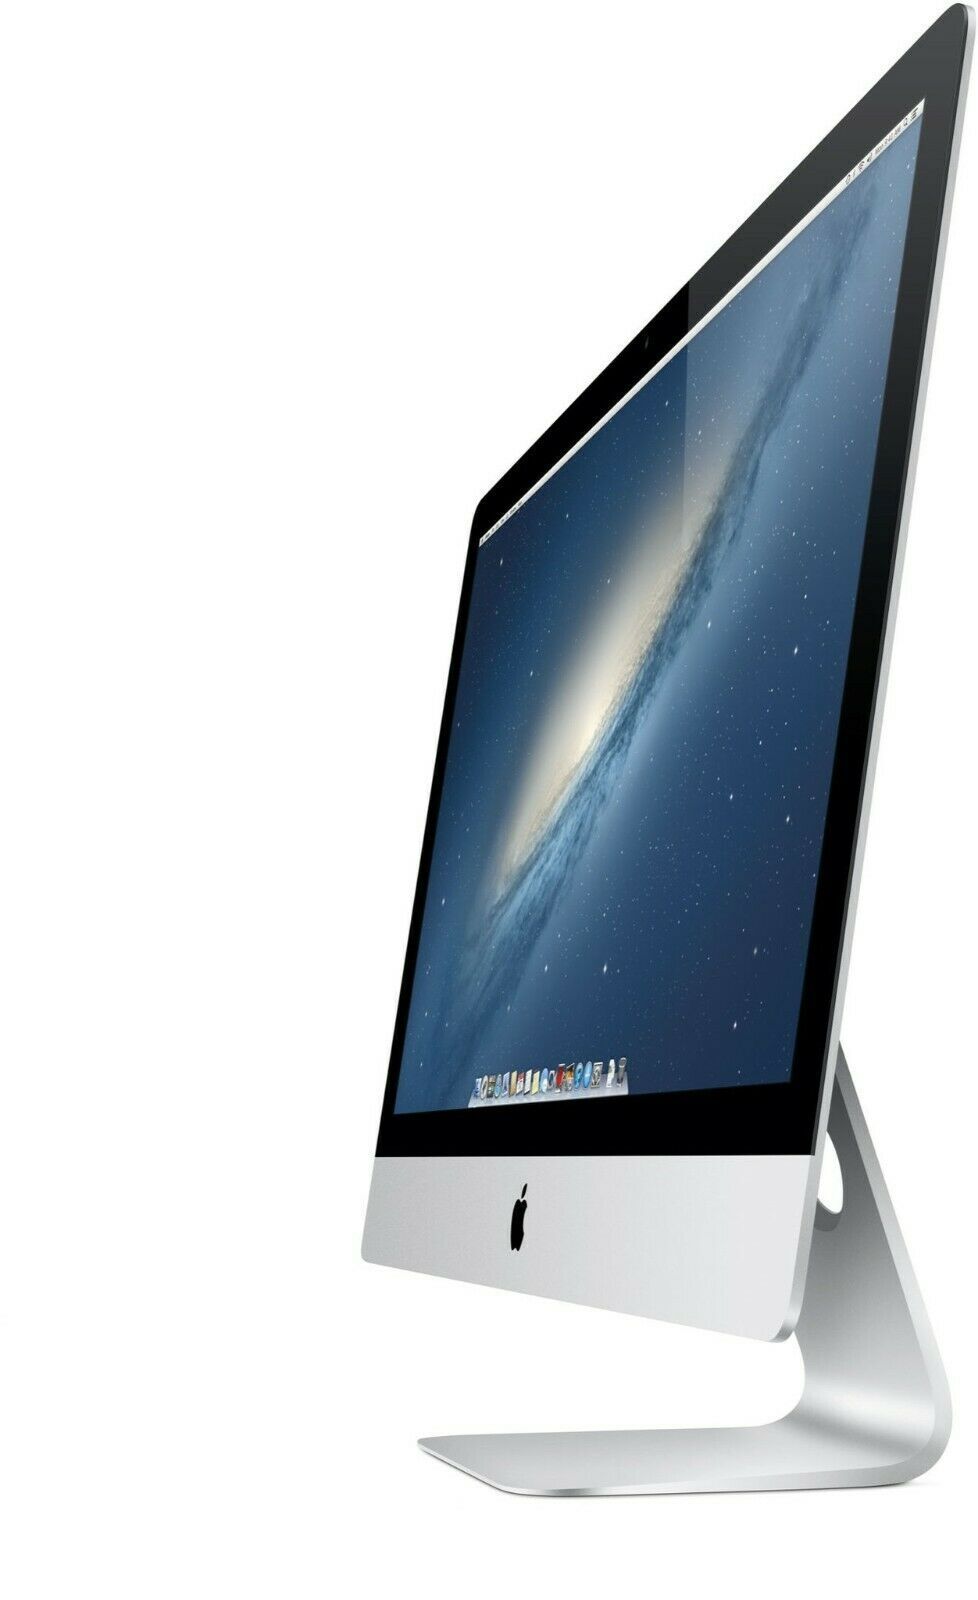 Apple iMac 27" Intel i5 3470s 2.90Ghz 4GB RAM 256GB SSD macOS Catalina Image 1